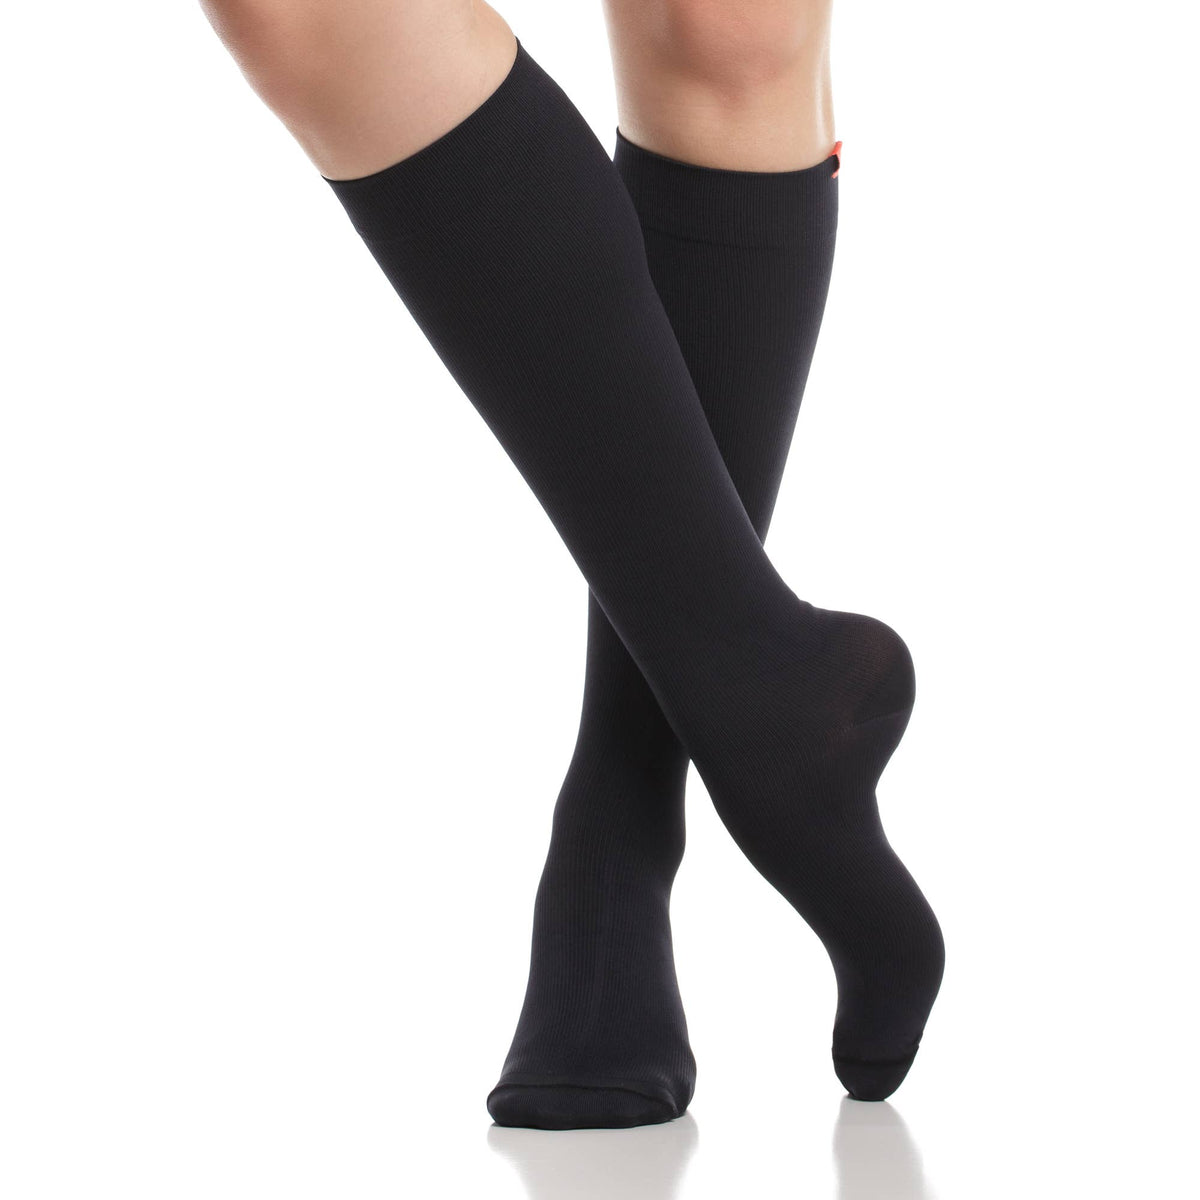 VIM & VIGR - 15-20 mmHg Merino Wool Compression Socks: Solid: Black / Large/Extra Large - Green Ash Decor